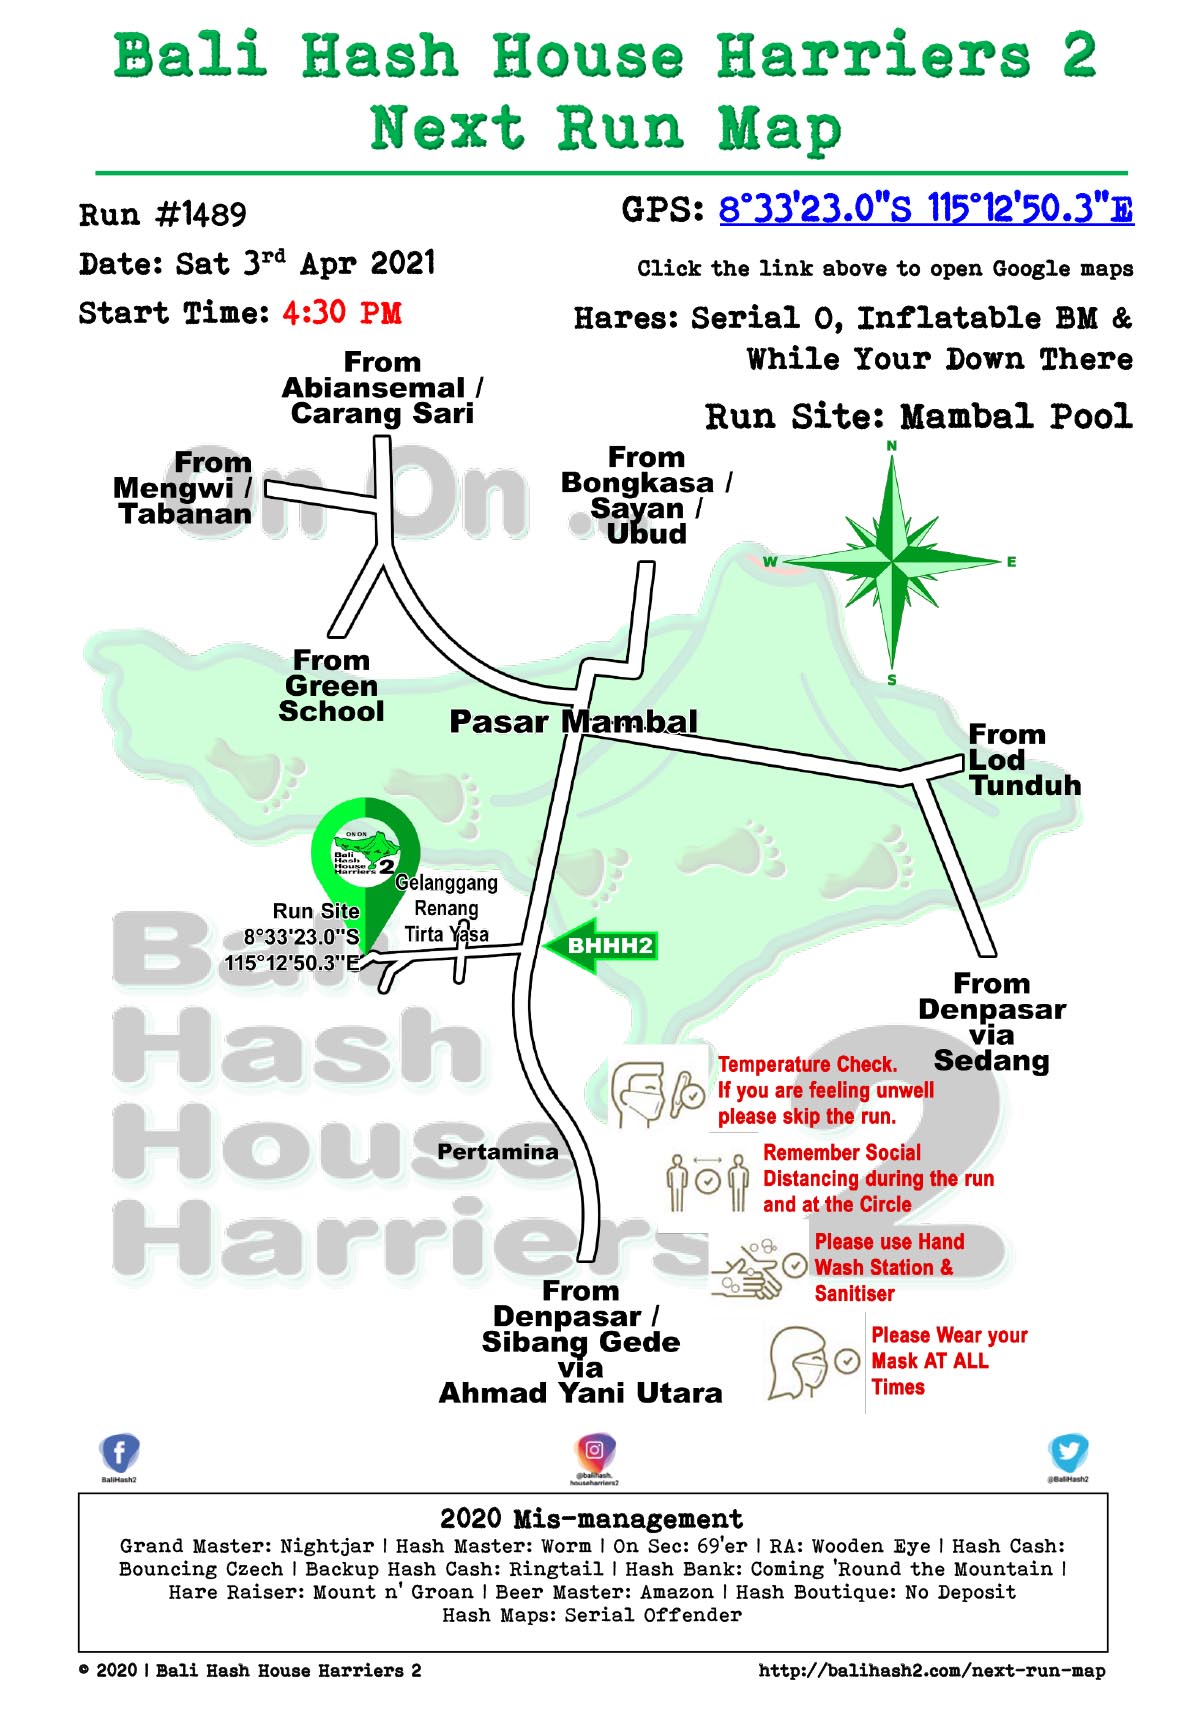 BHHH2 Next Run Map #1489 Mambal Swimming Pool 3-Apr-21